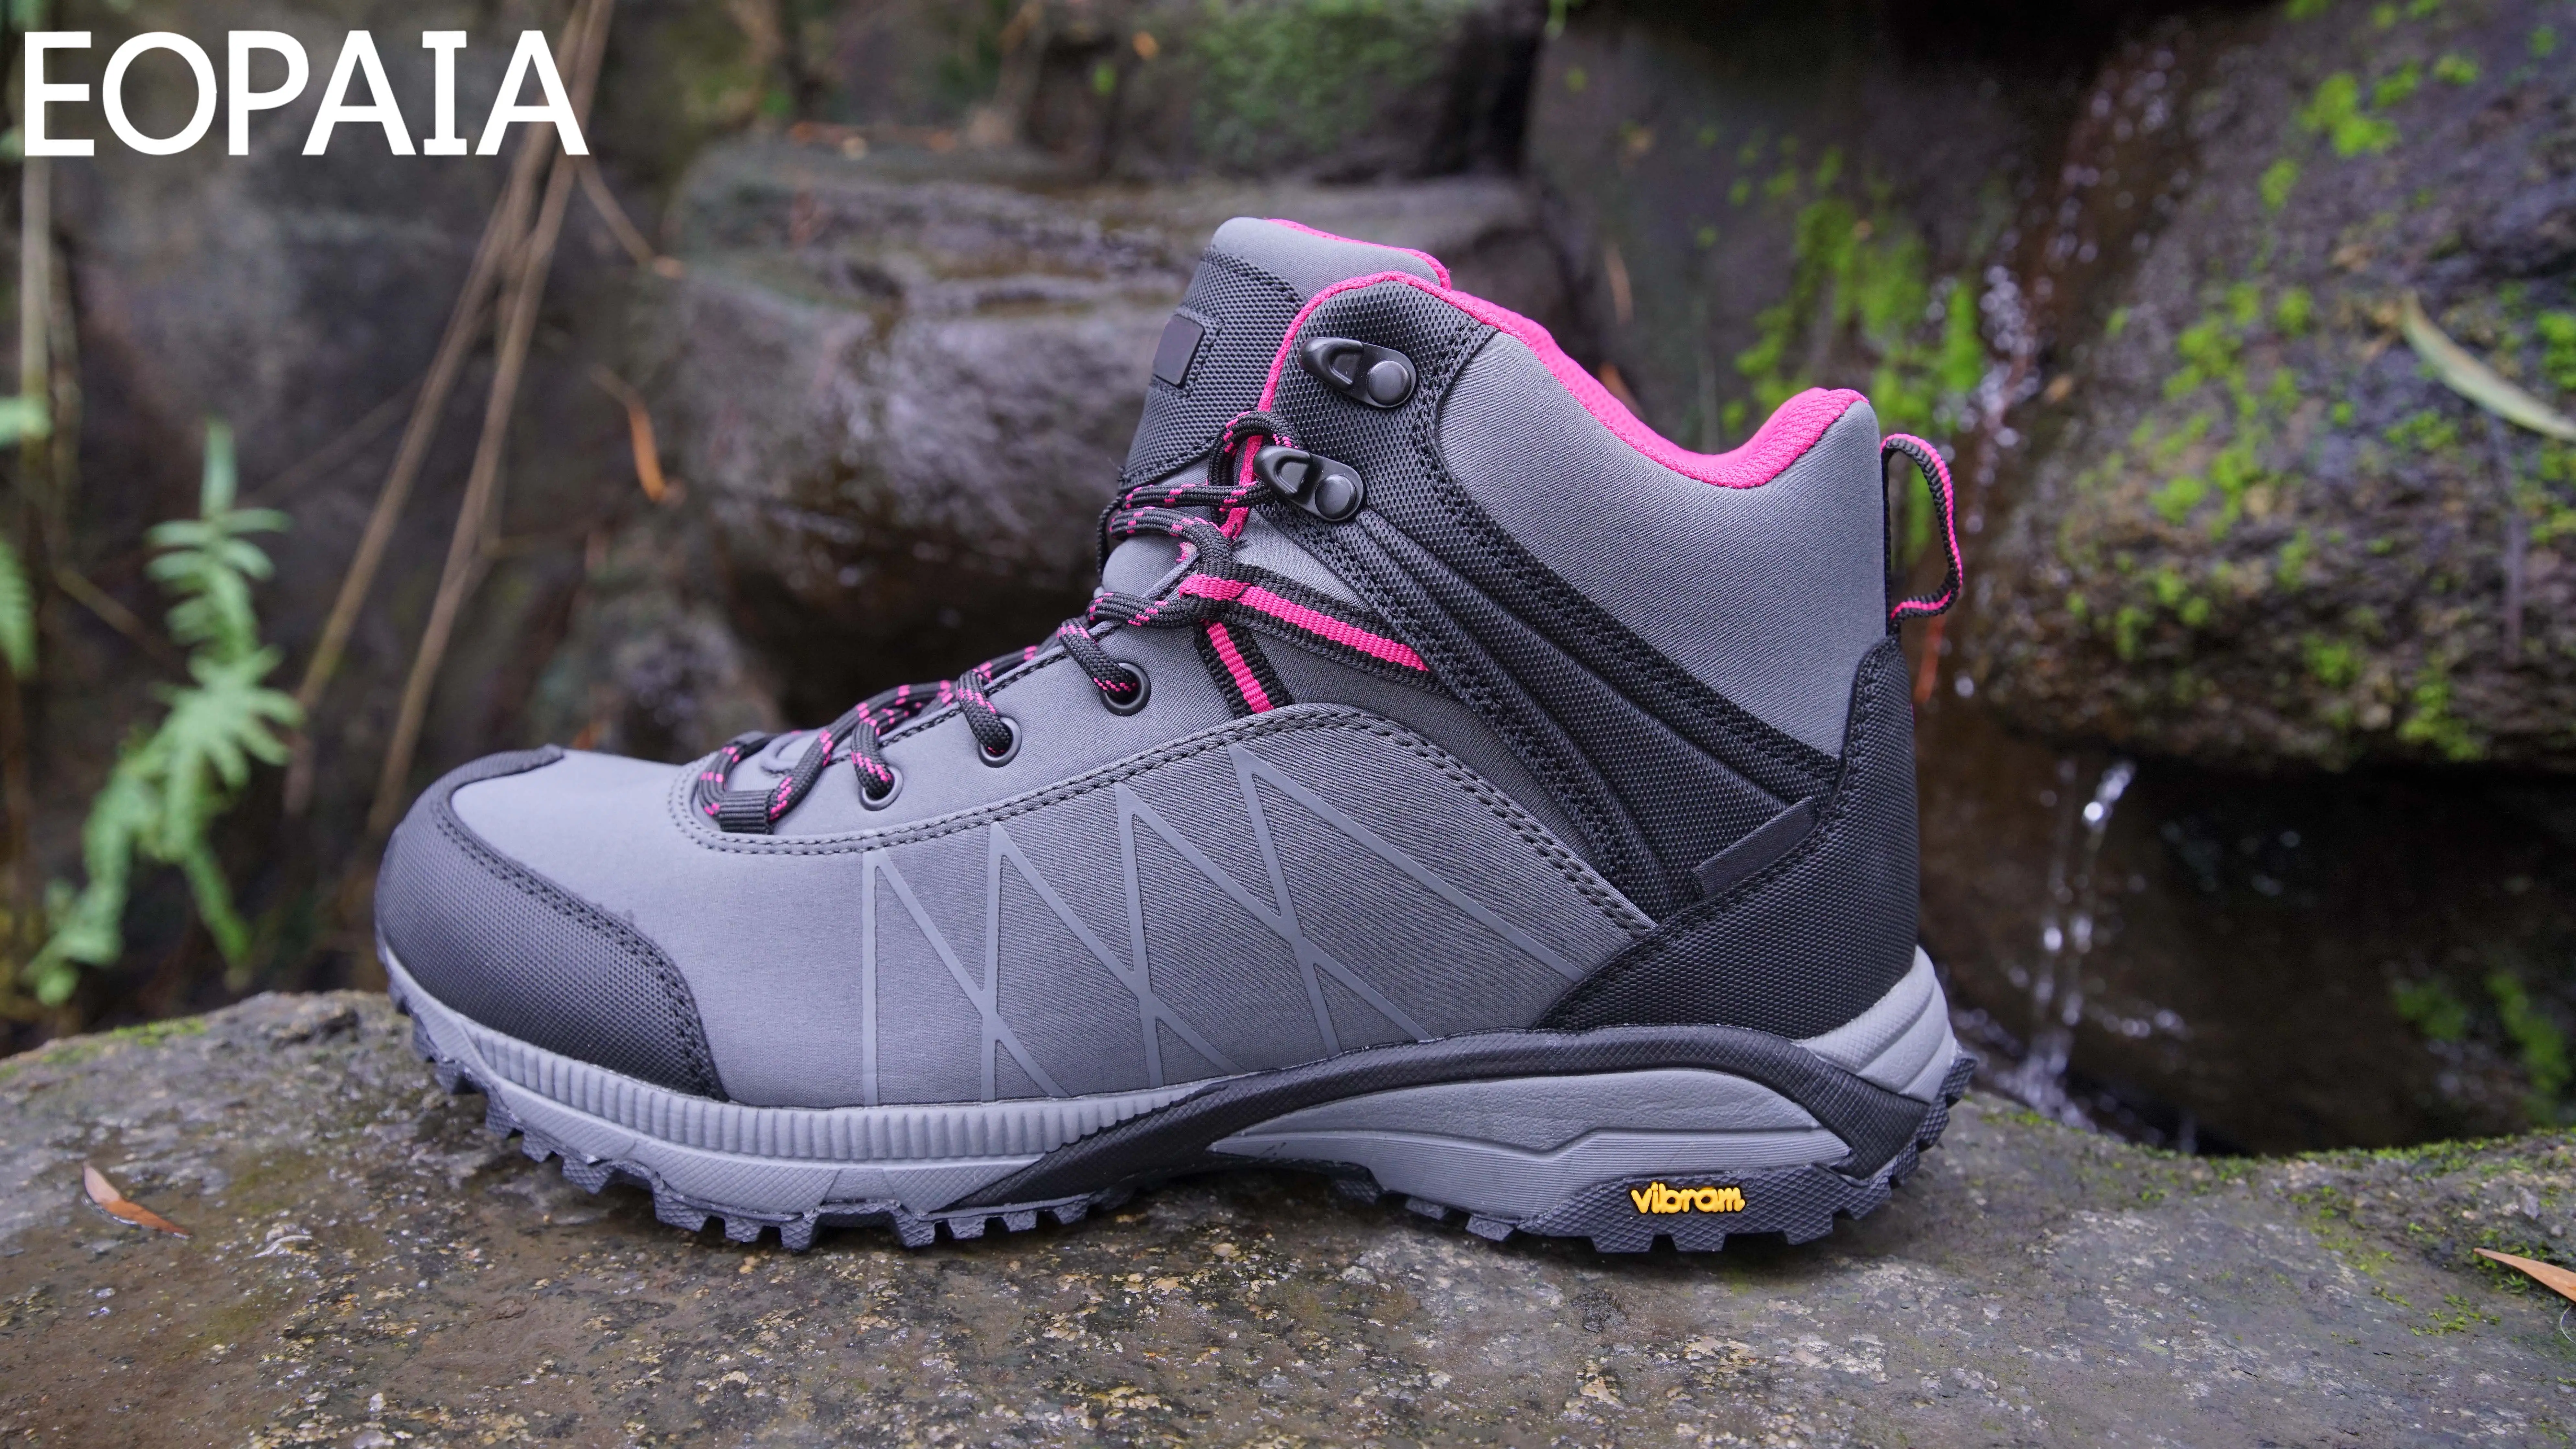 rubber outsole anti-slip women's hiking shoes
